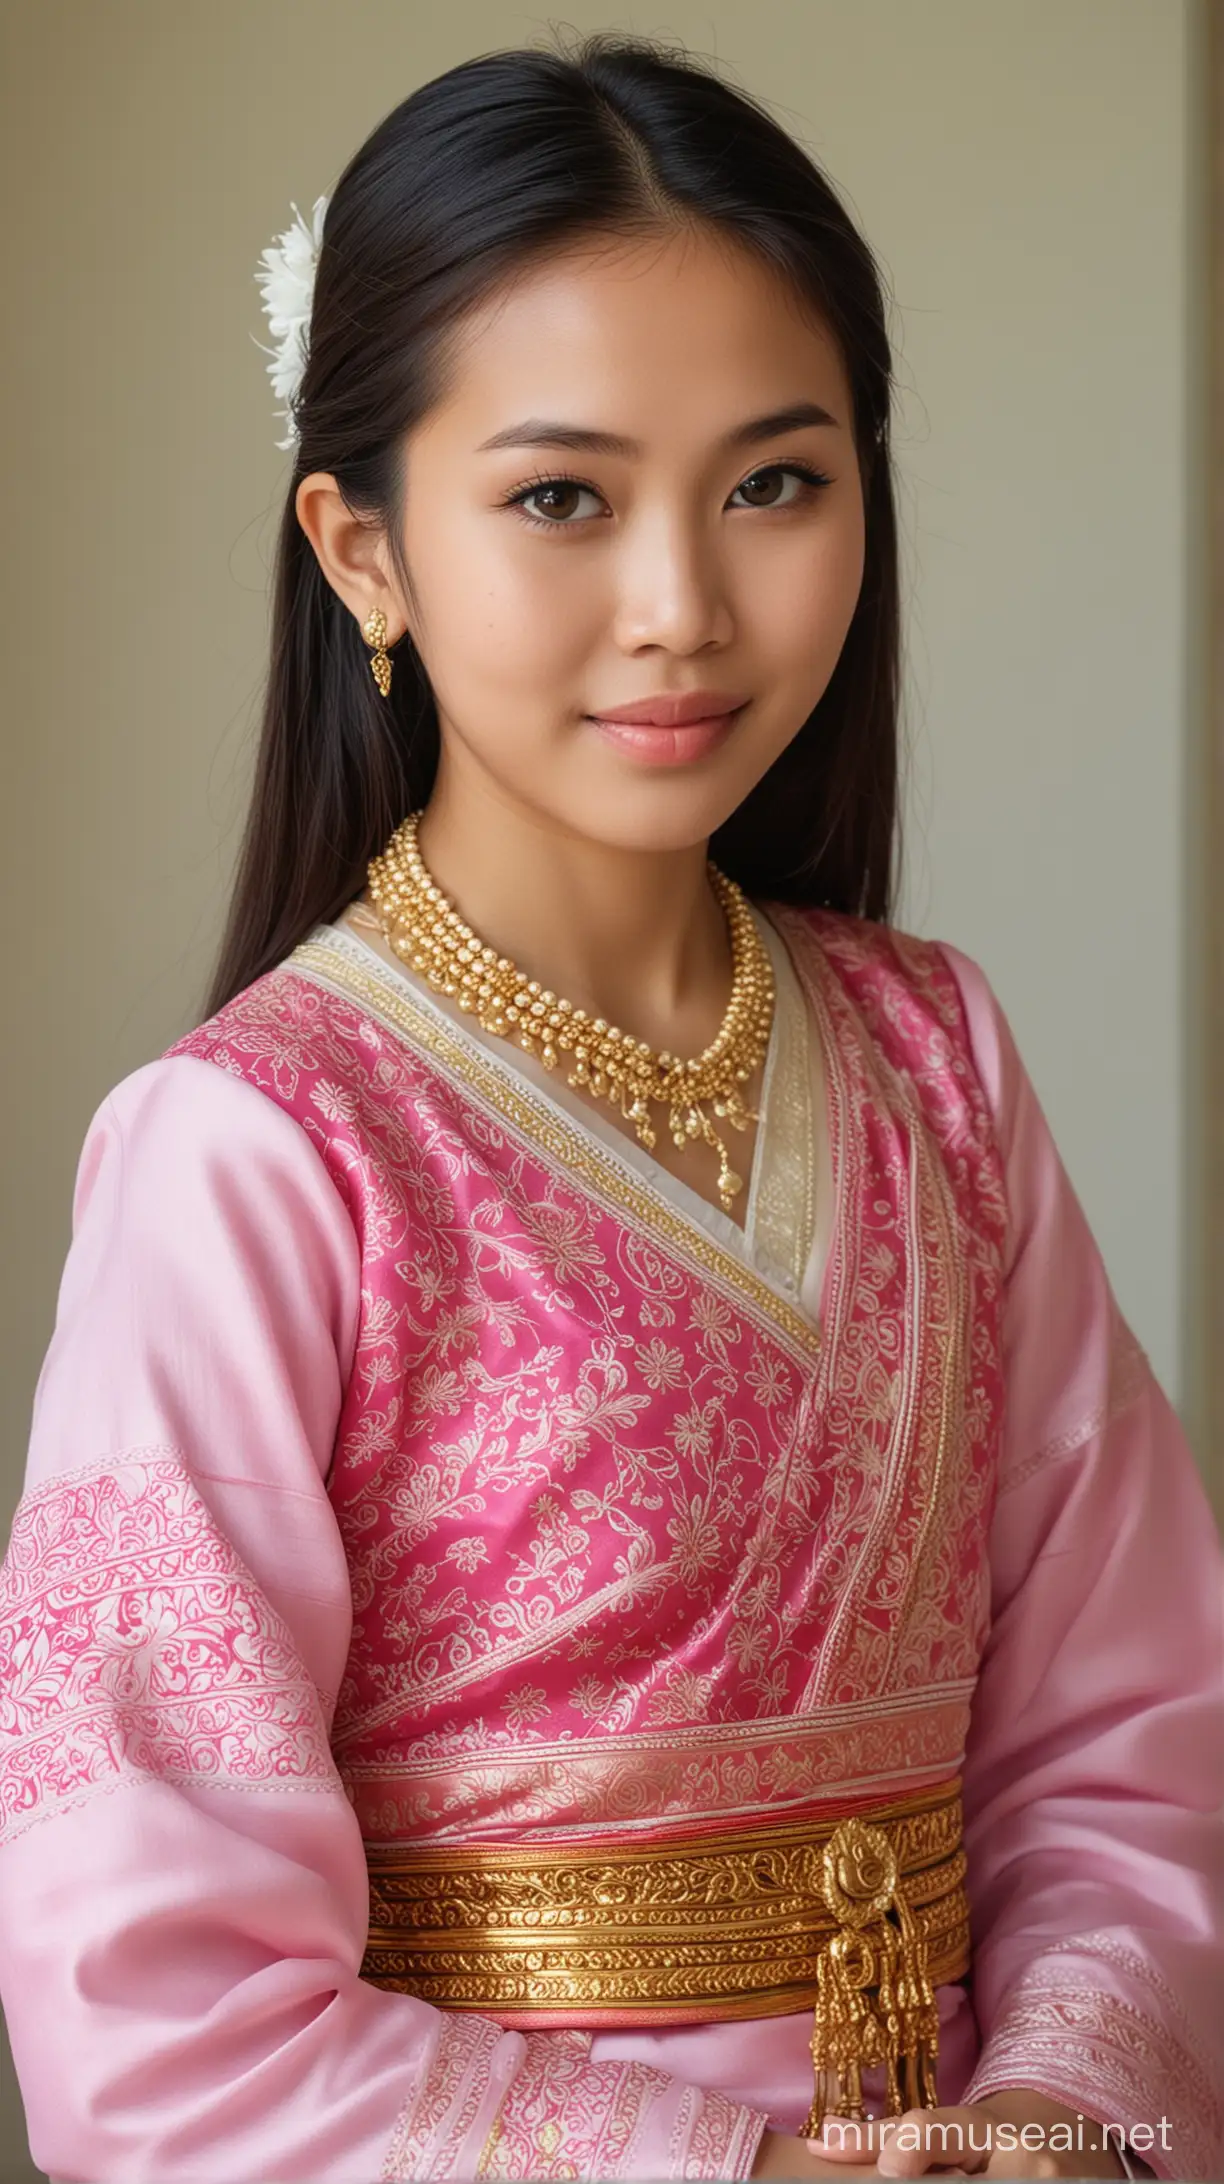 Traditional Thai Girl in Elegant Attire